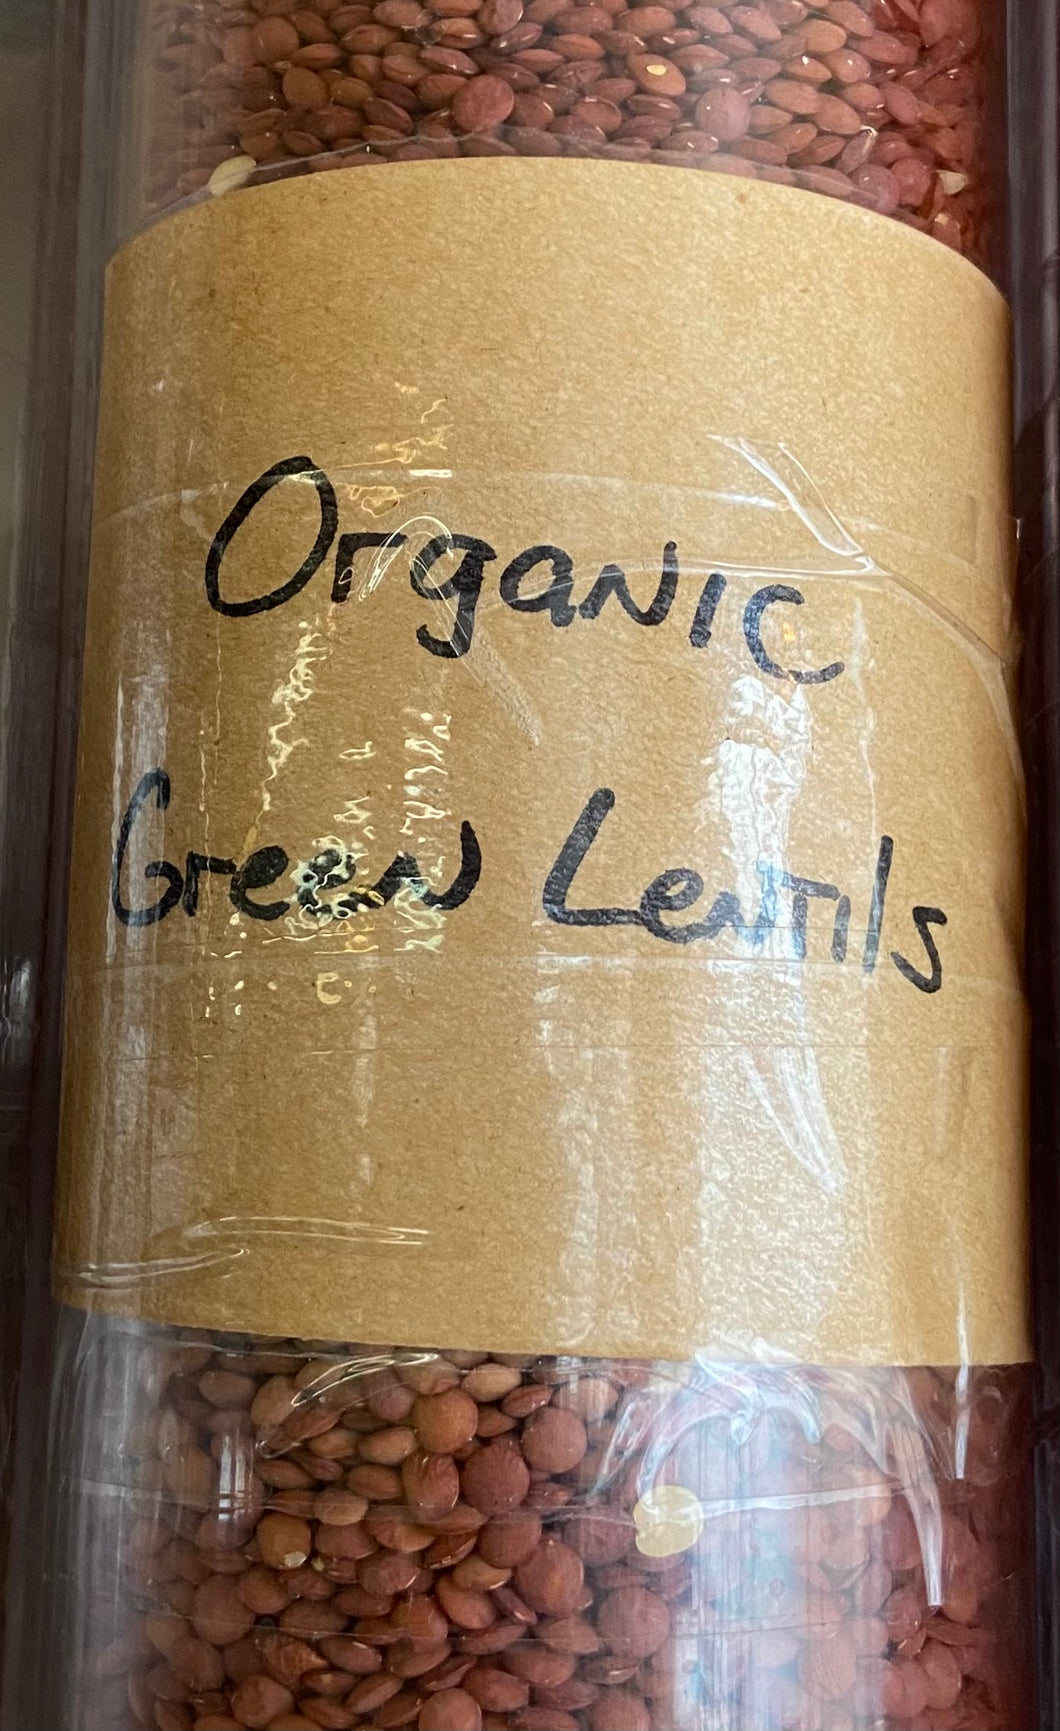 Lentils, Organic Bulk Green